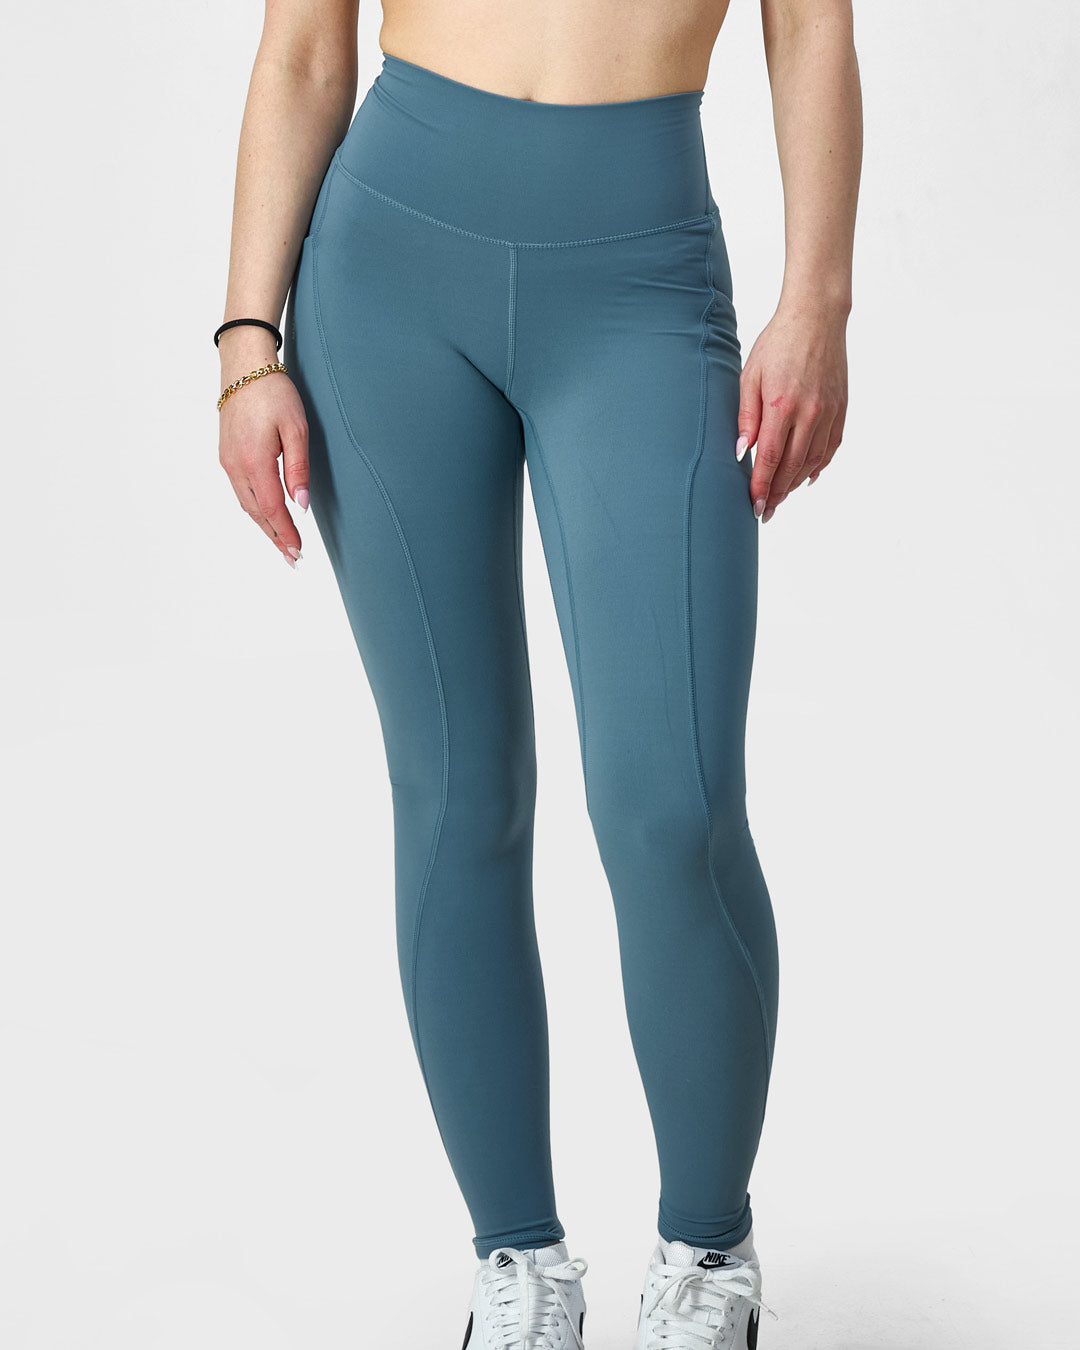 Blue Mirage, leggings, yoga pants, activewear, fitness pants